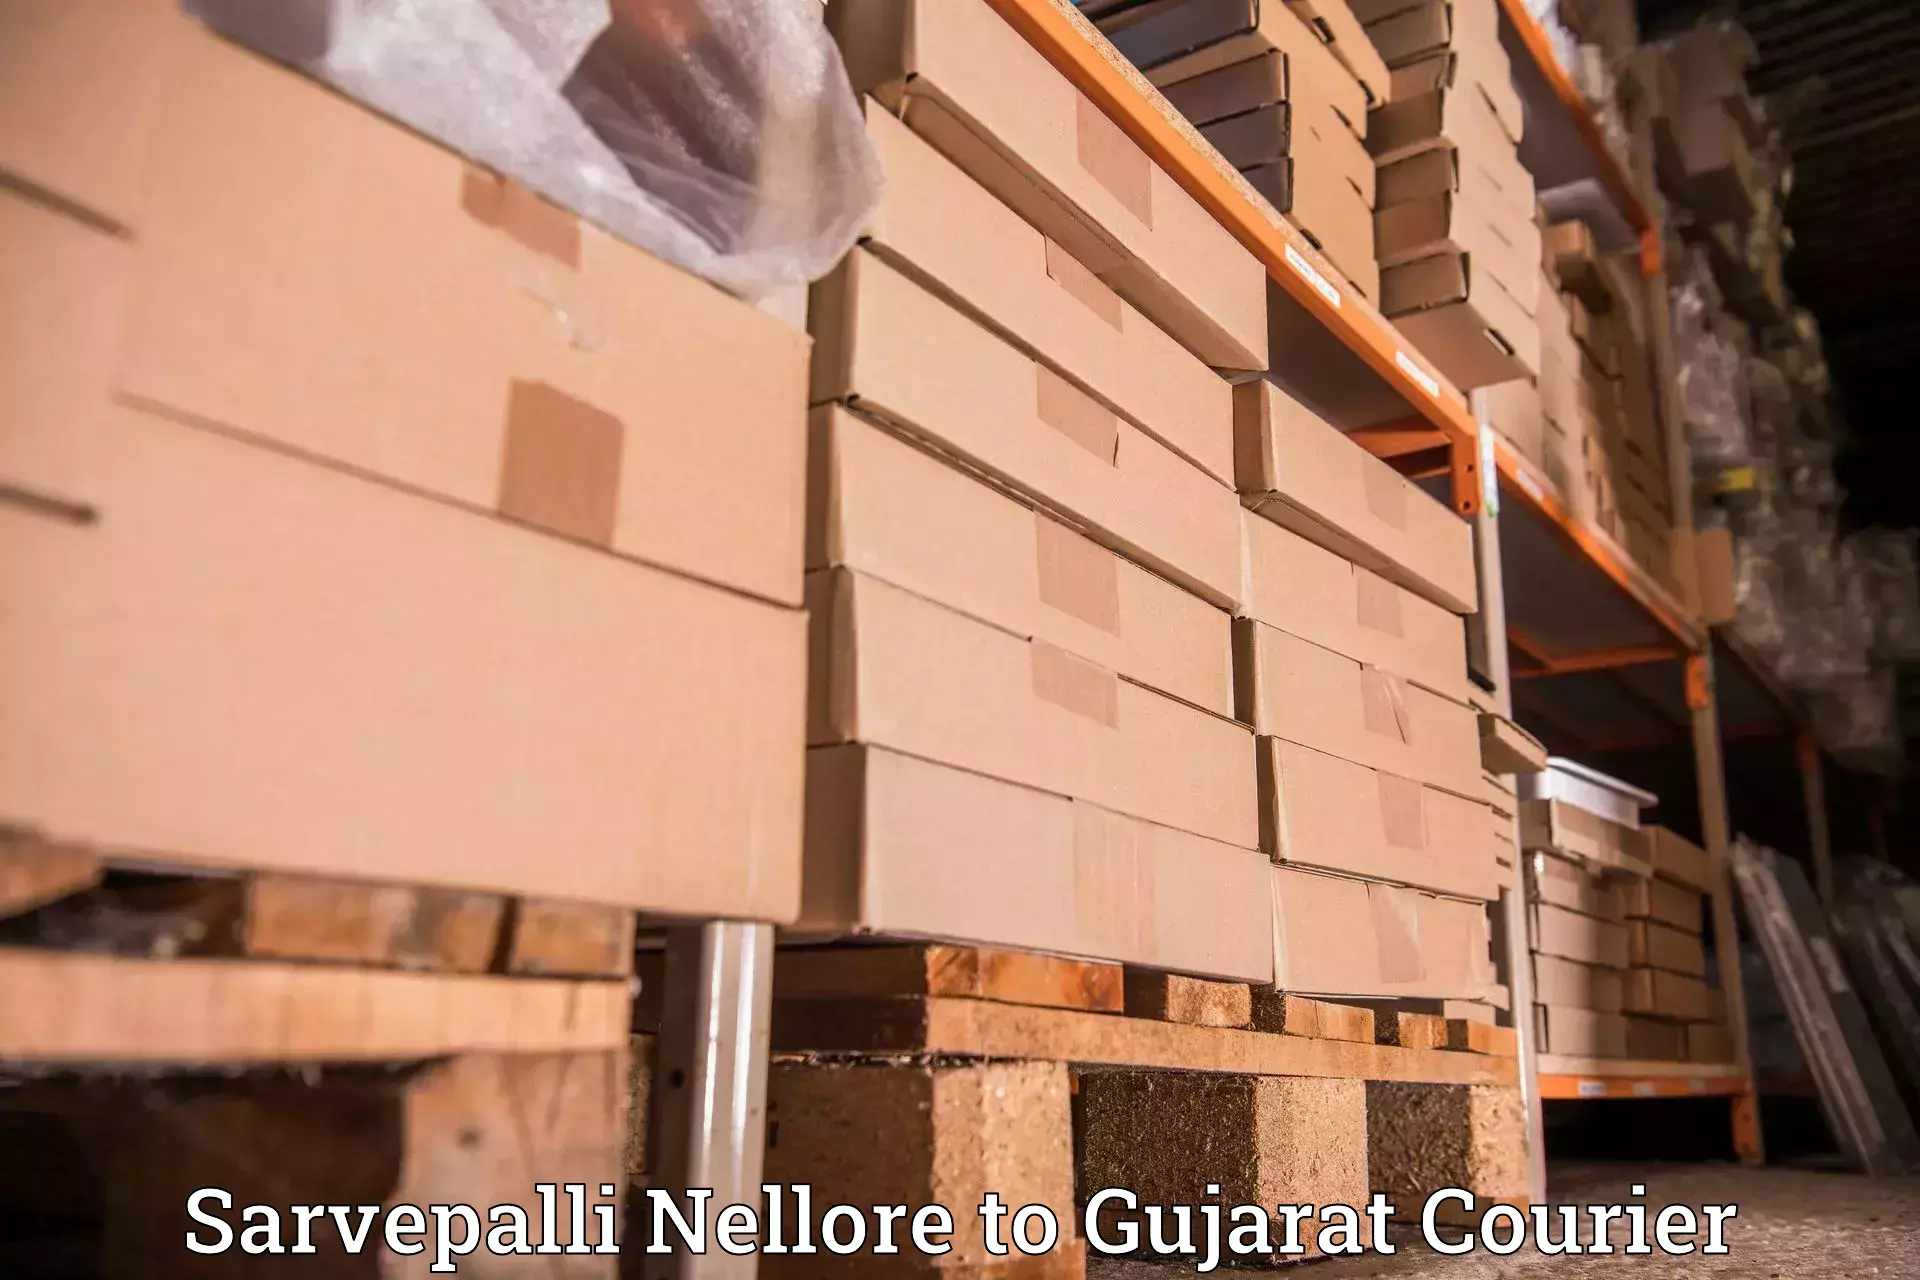 Specialized shipment handling Sarvepalli Nellore to Gujarat